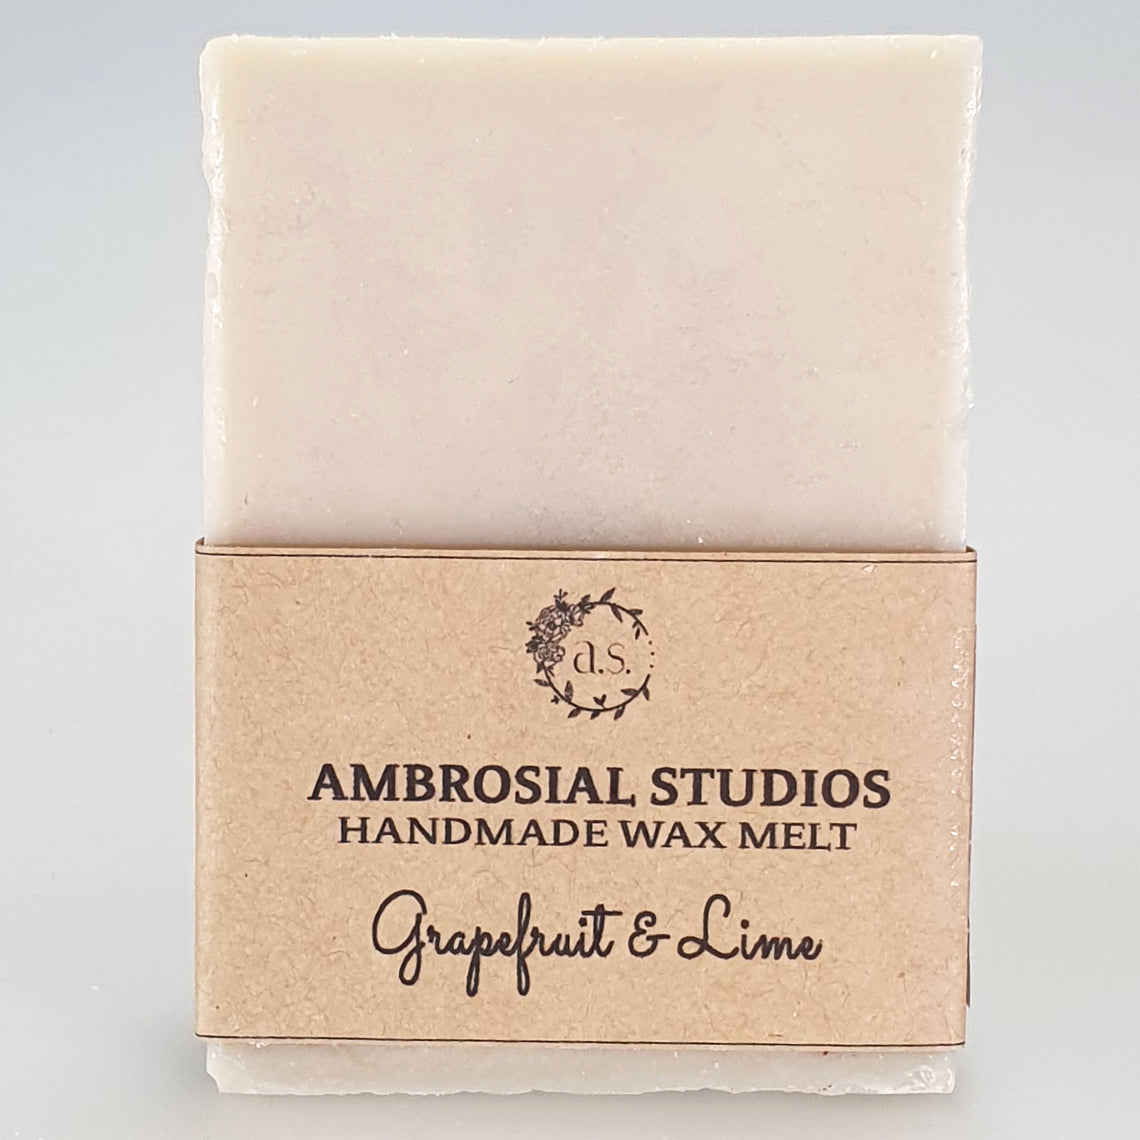 Ambrosial Studios - Handmade Wax Melt - Grapefruit & Lime